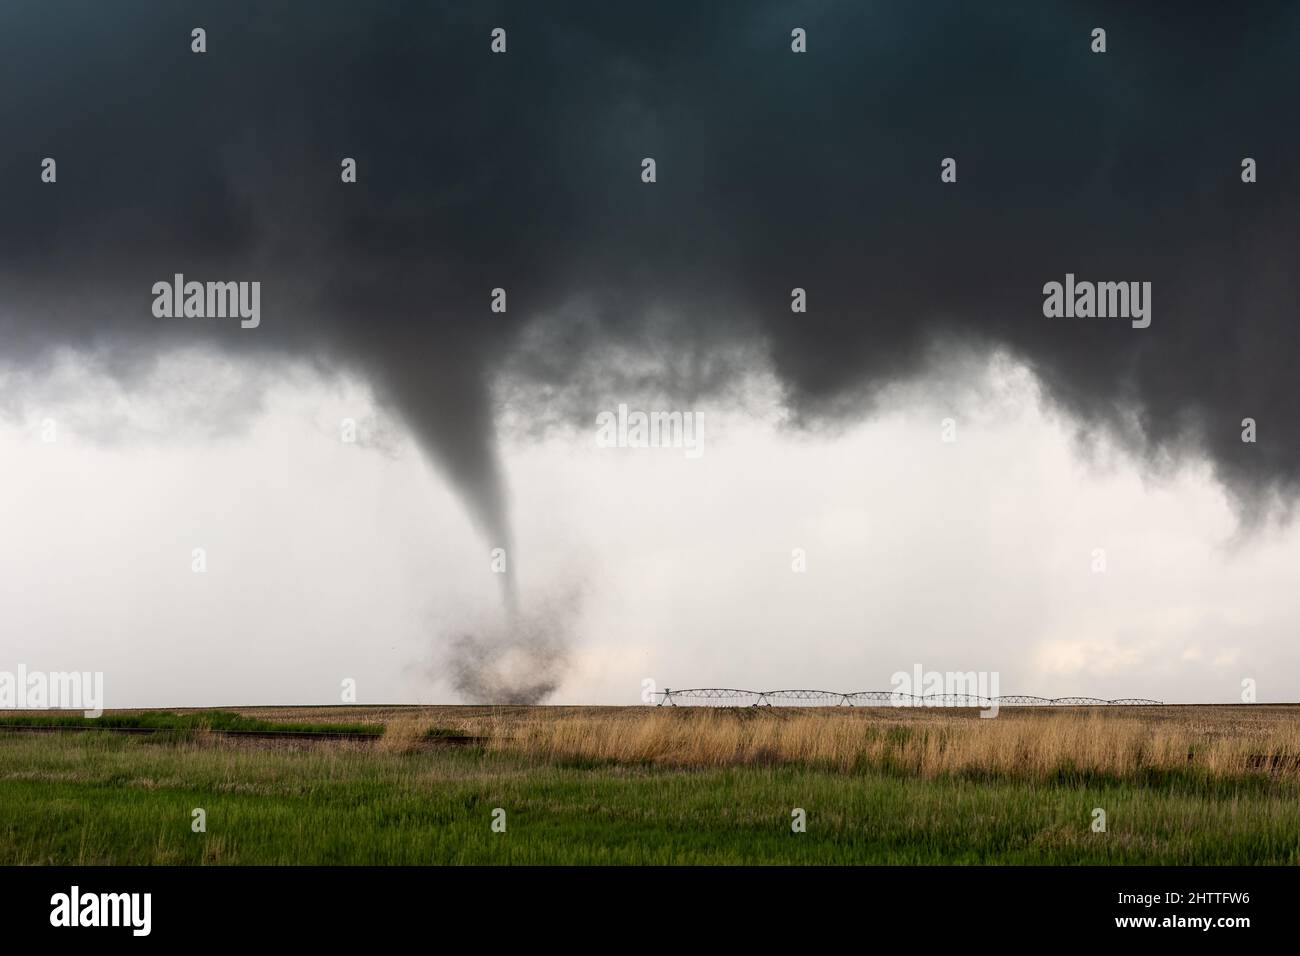 Tornado funnel touching down in a storm near Selden, Kansas, USA Stock Photo